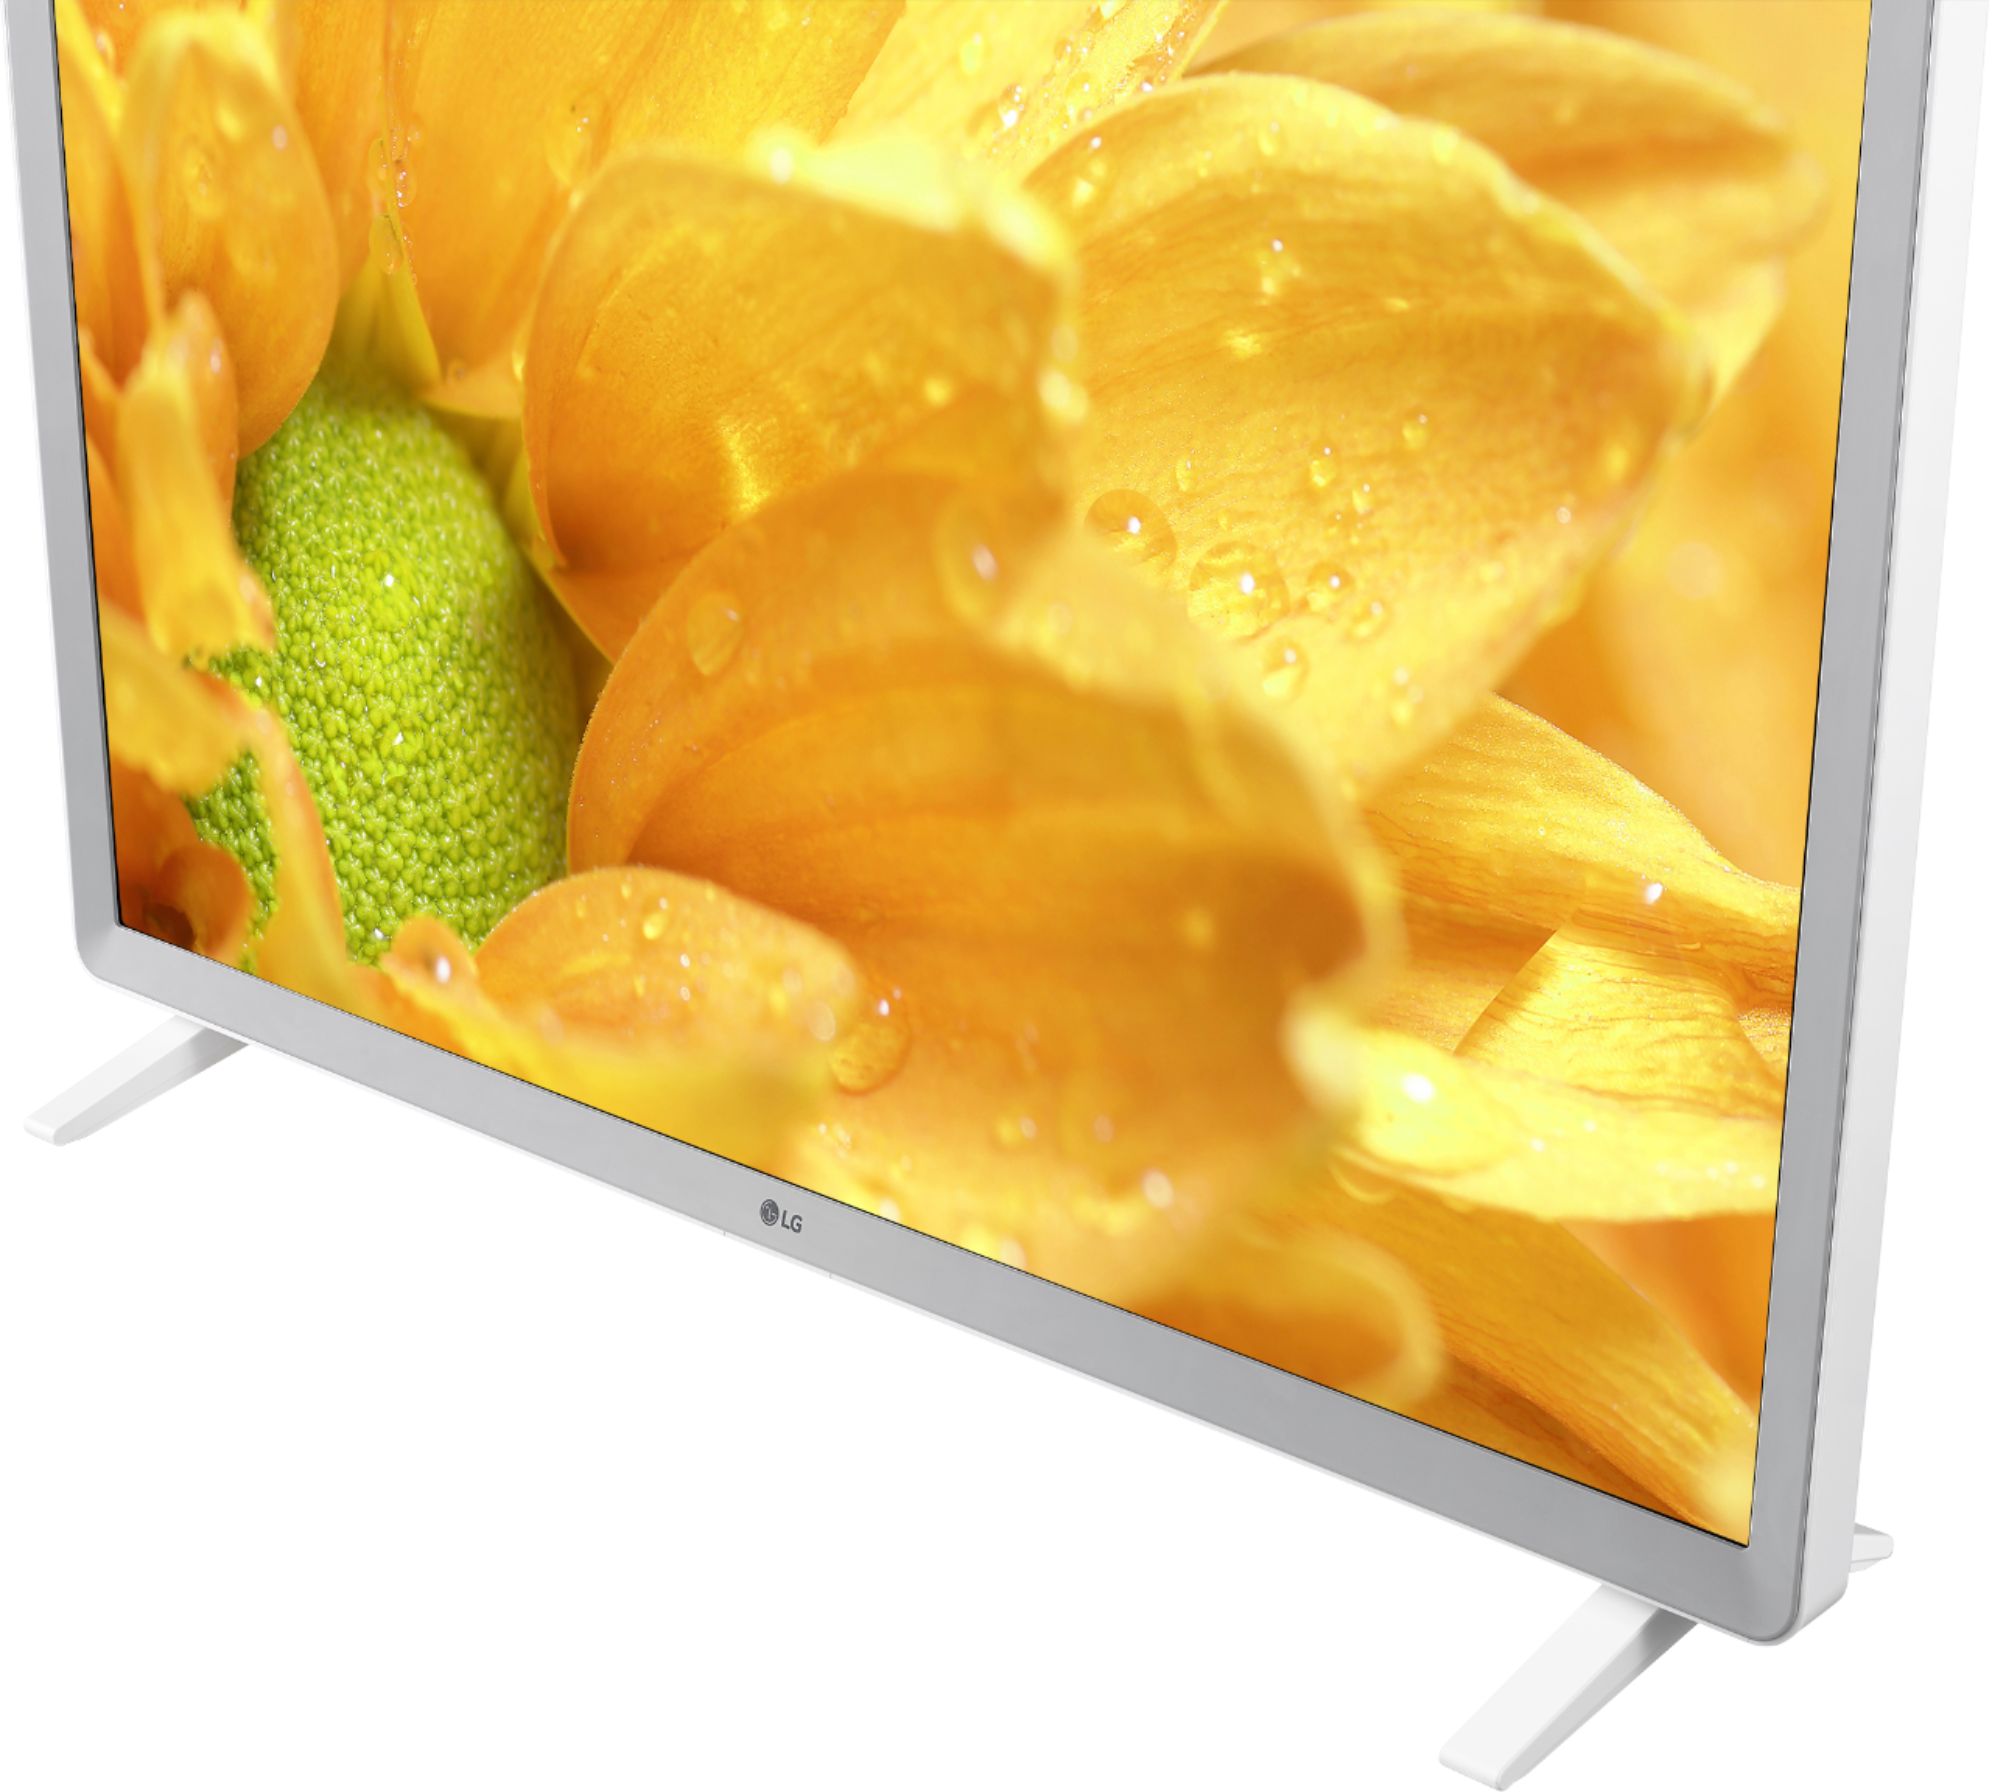 LG - 32inch Class LED HD Smart webOS TV